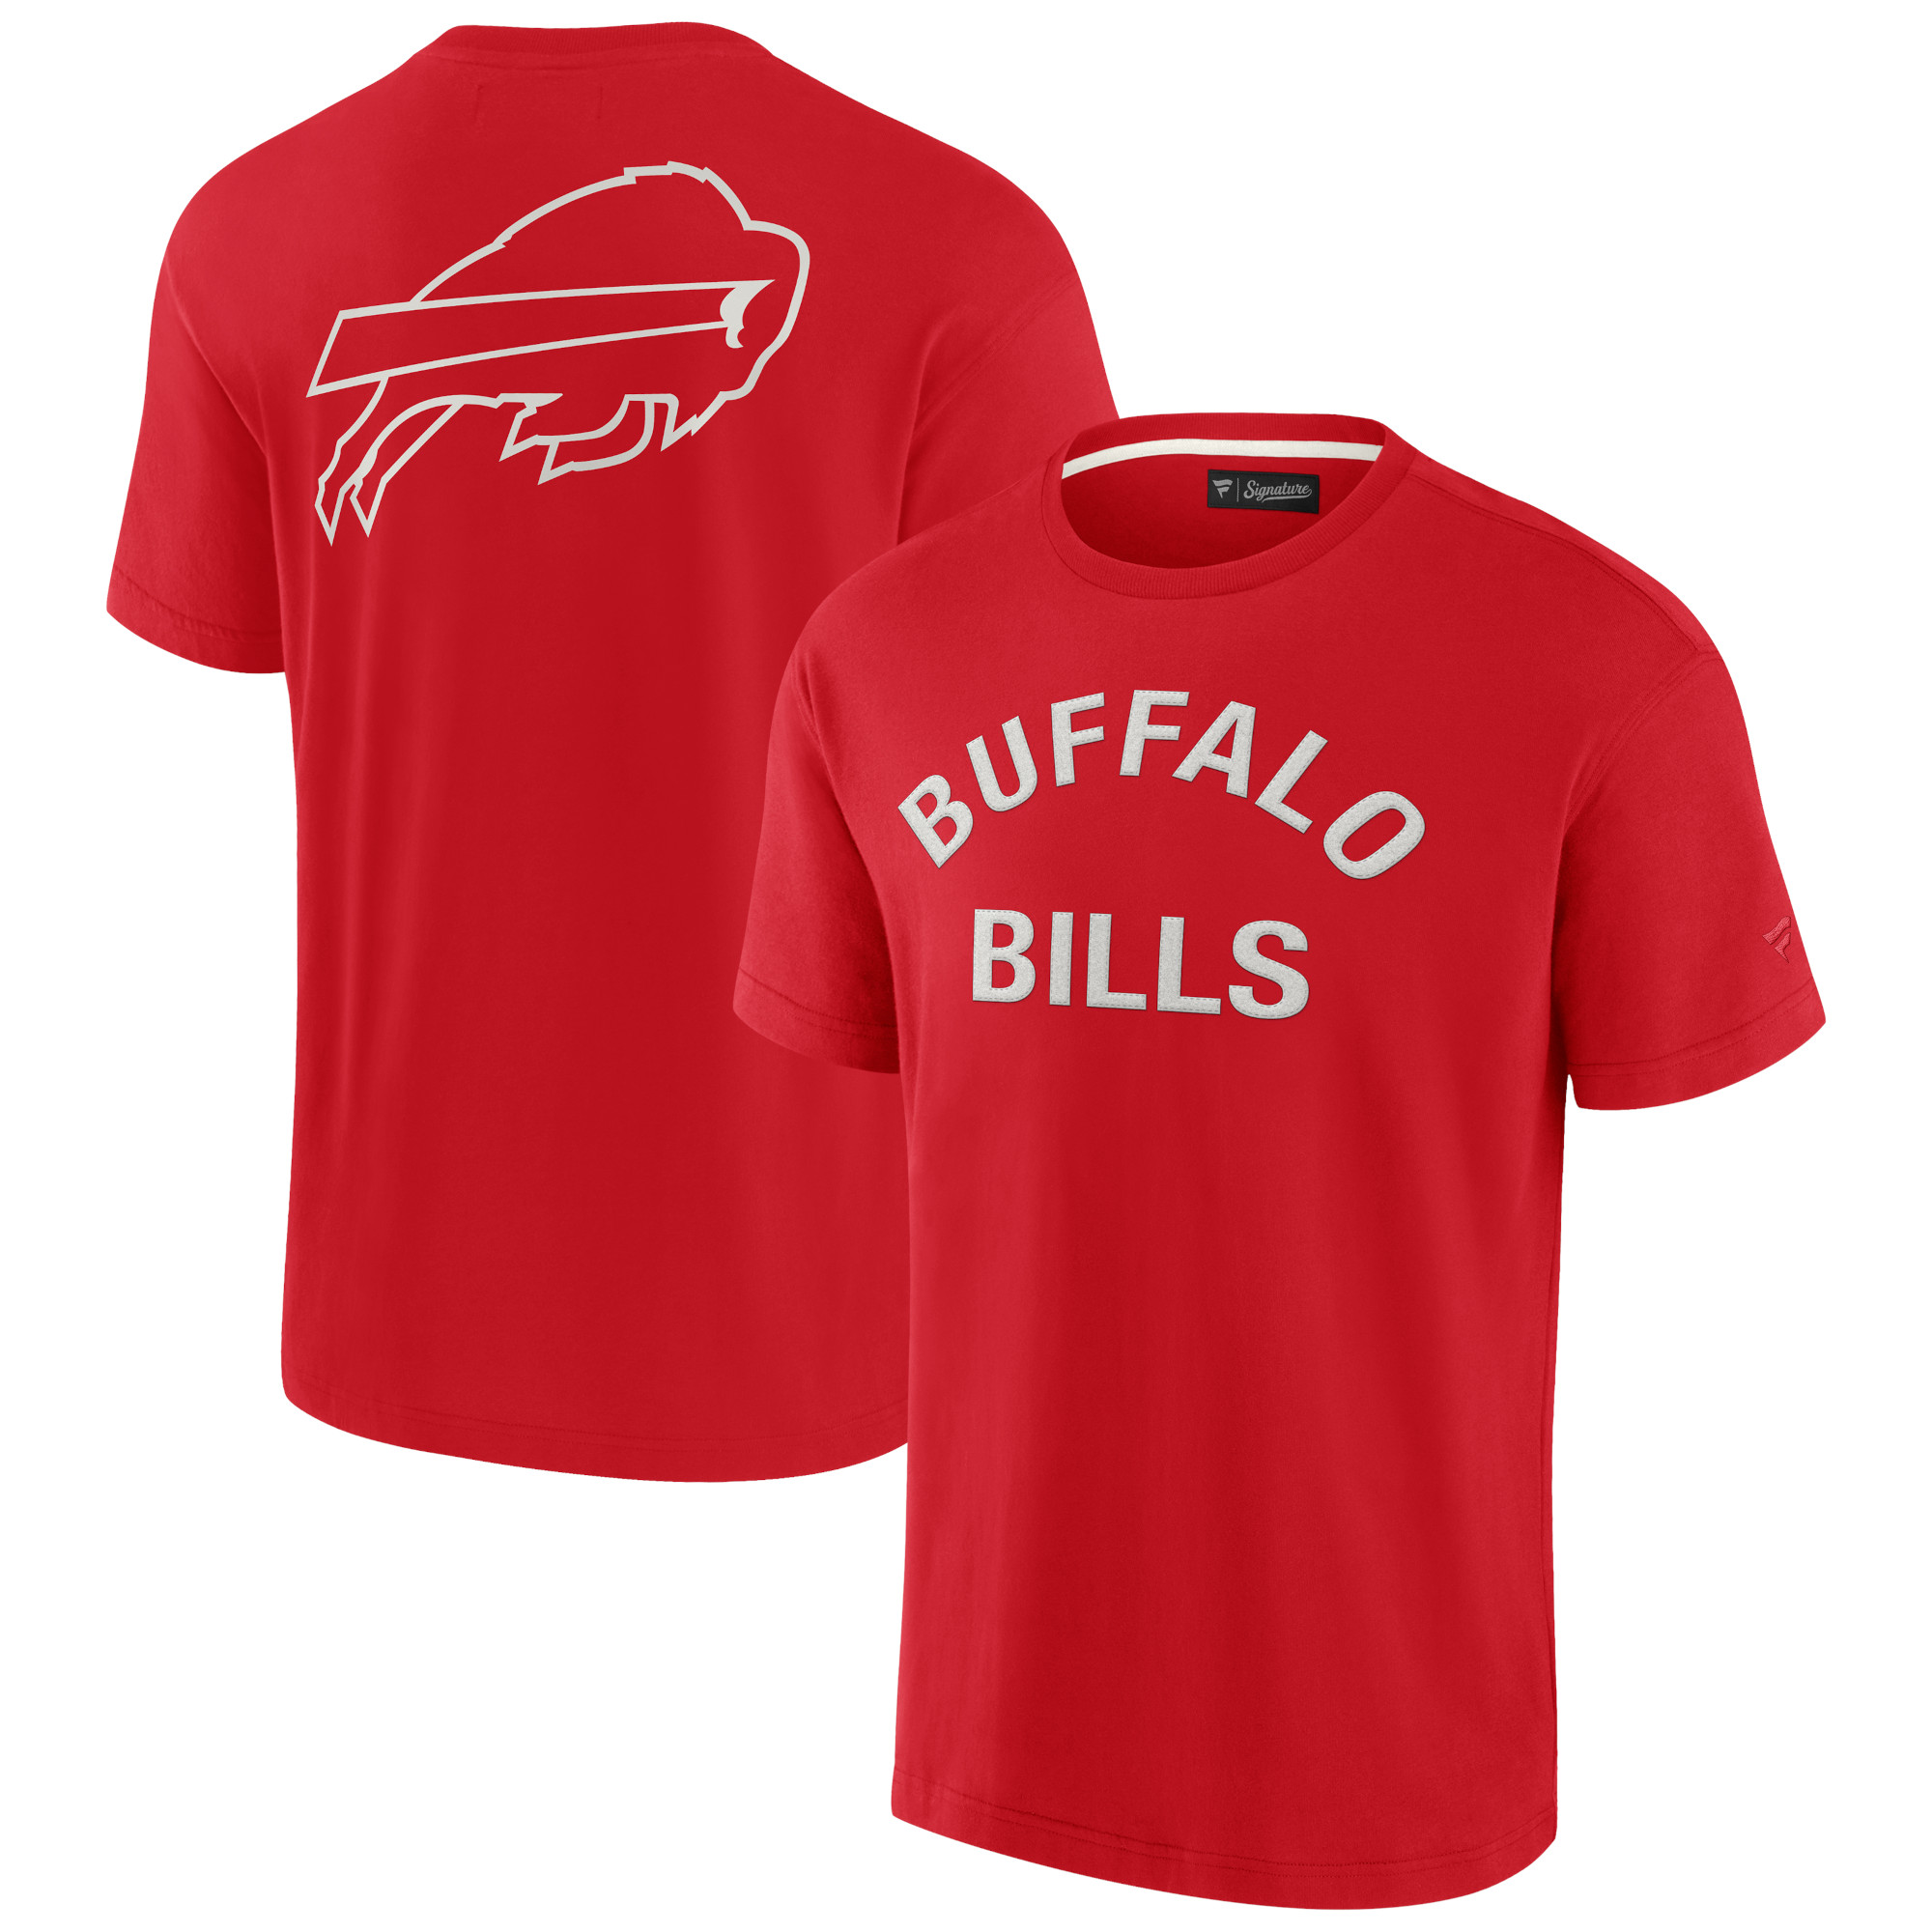 Unisex Fanatics Buffalo Bills Elements Superweiches Kurzarm-T-Shirt in Rot